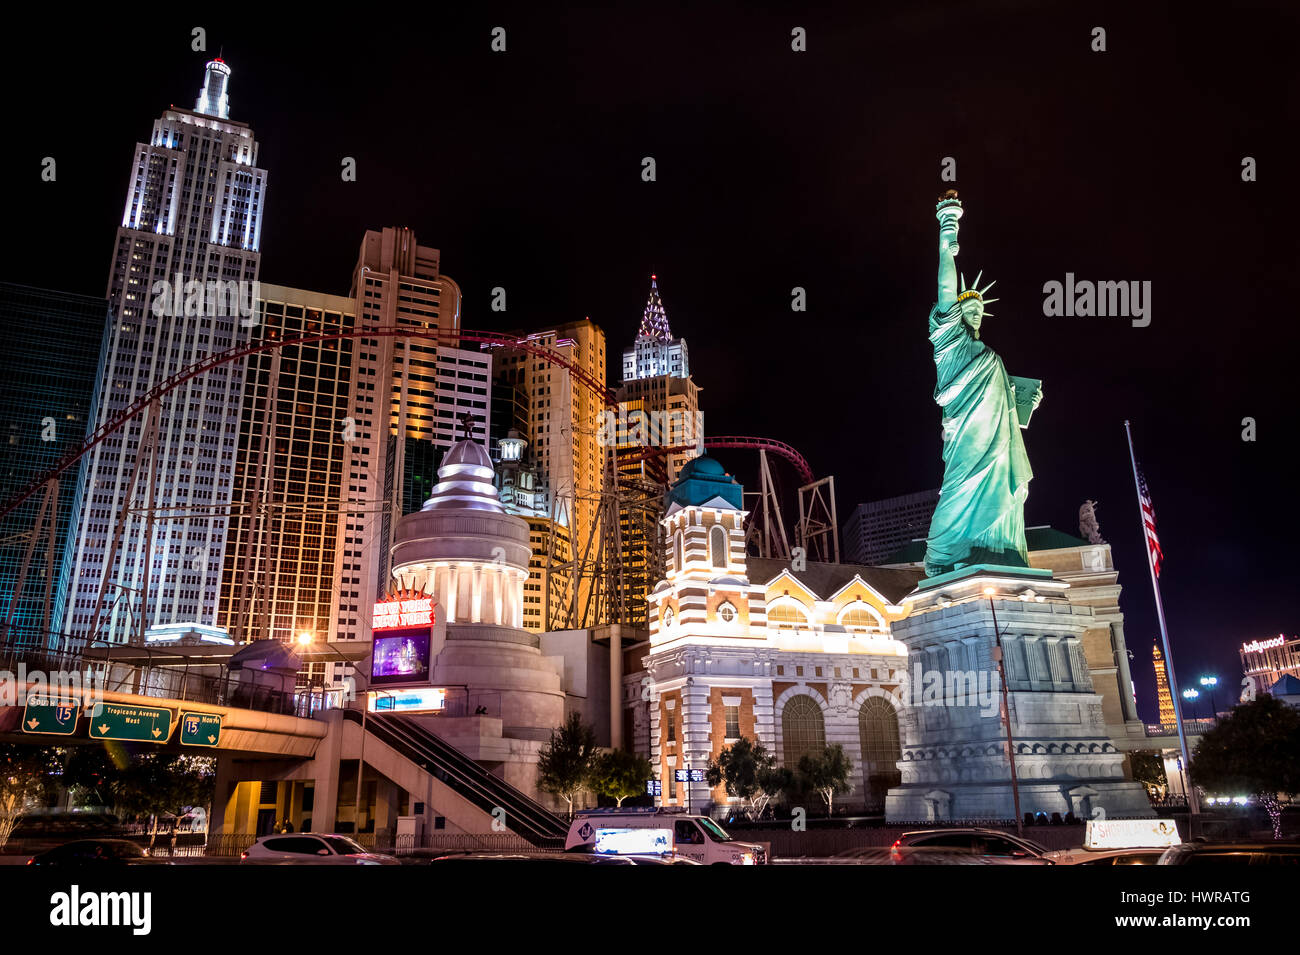 Inside the New York, New York hotel in Las Vegas Stock Photo - Alamy